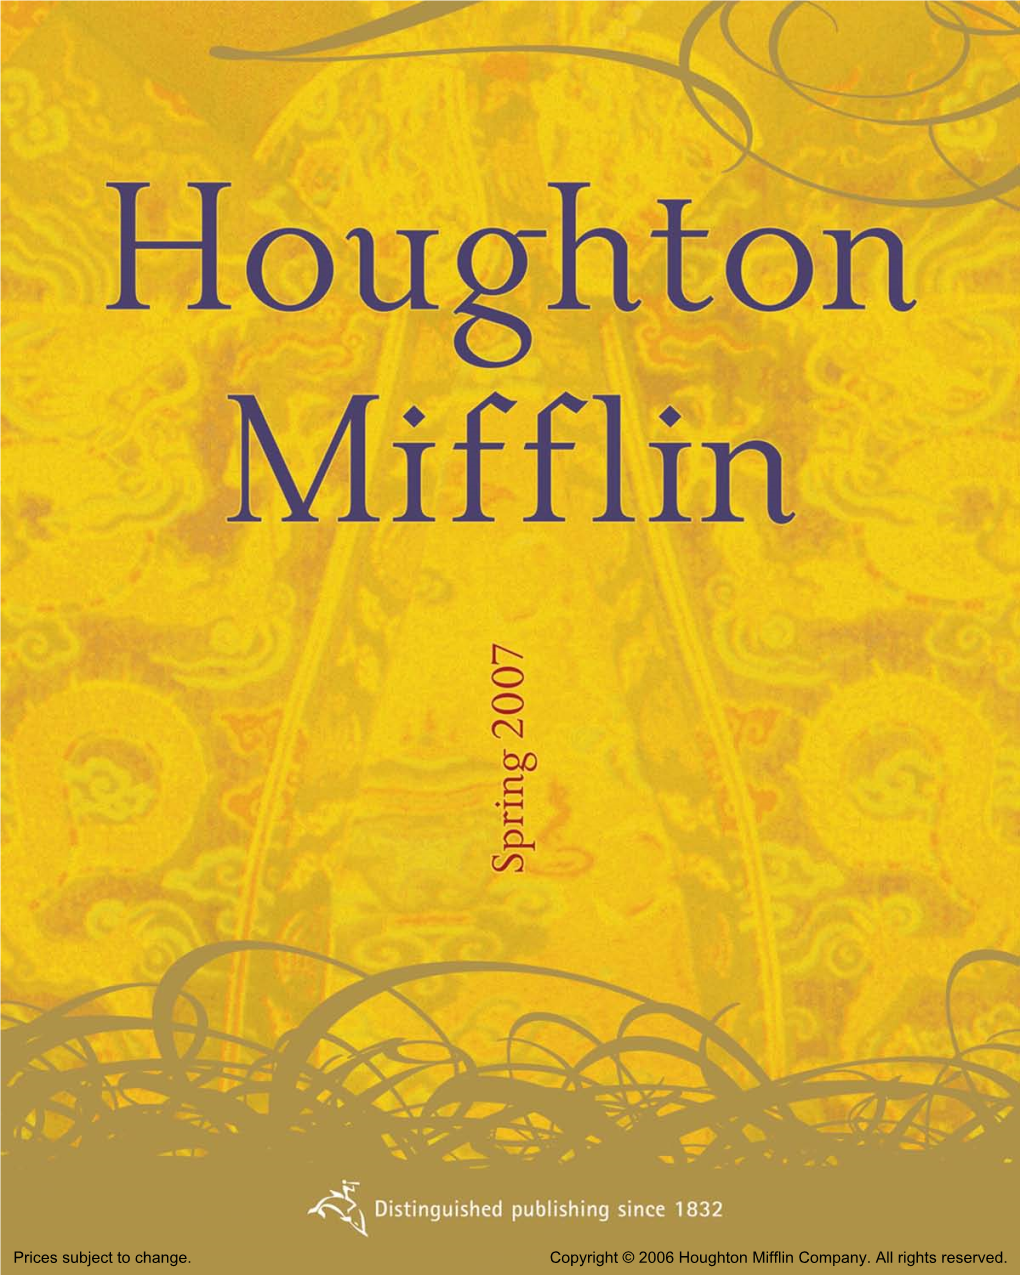 Houghon Mifflin General Interest Spring 2007 Catalog